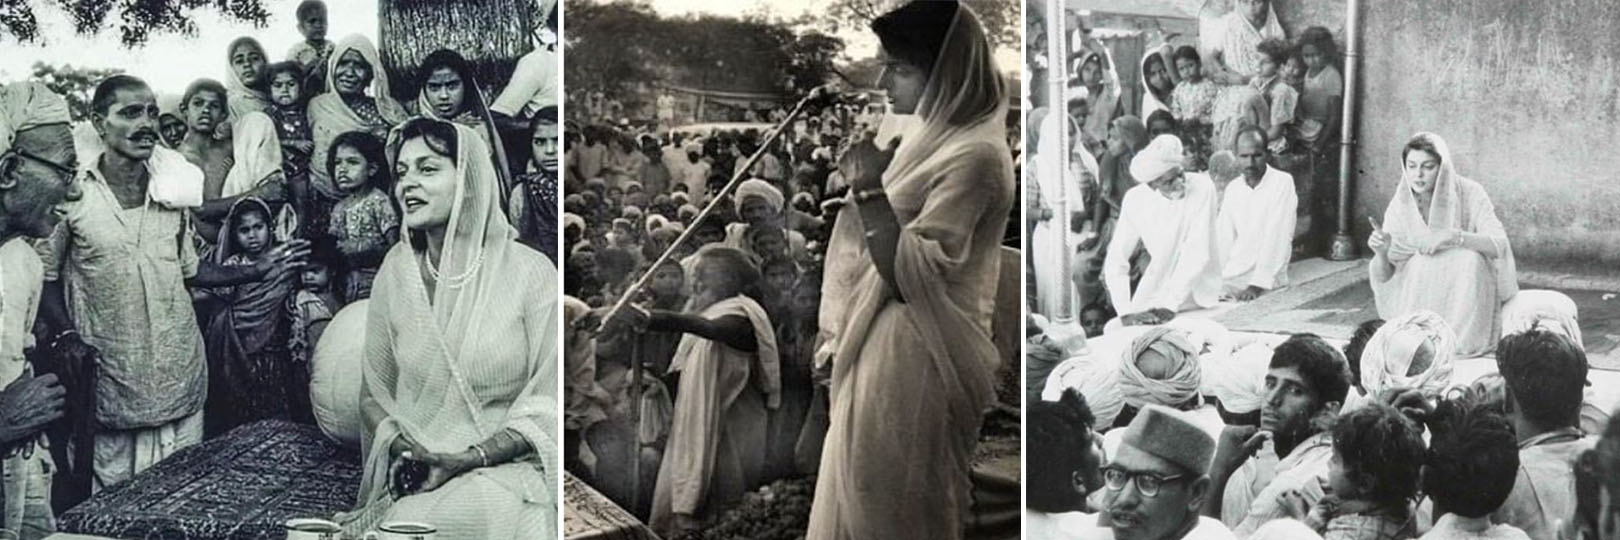 Maharani Gayatri Devi The Diamond Talk